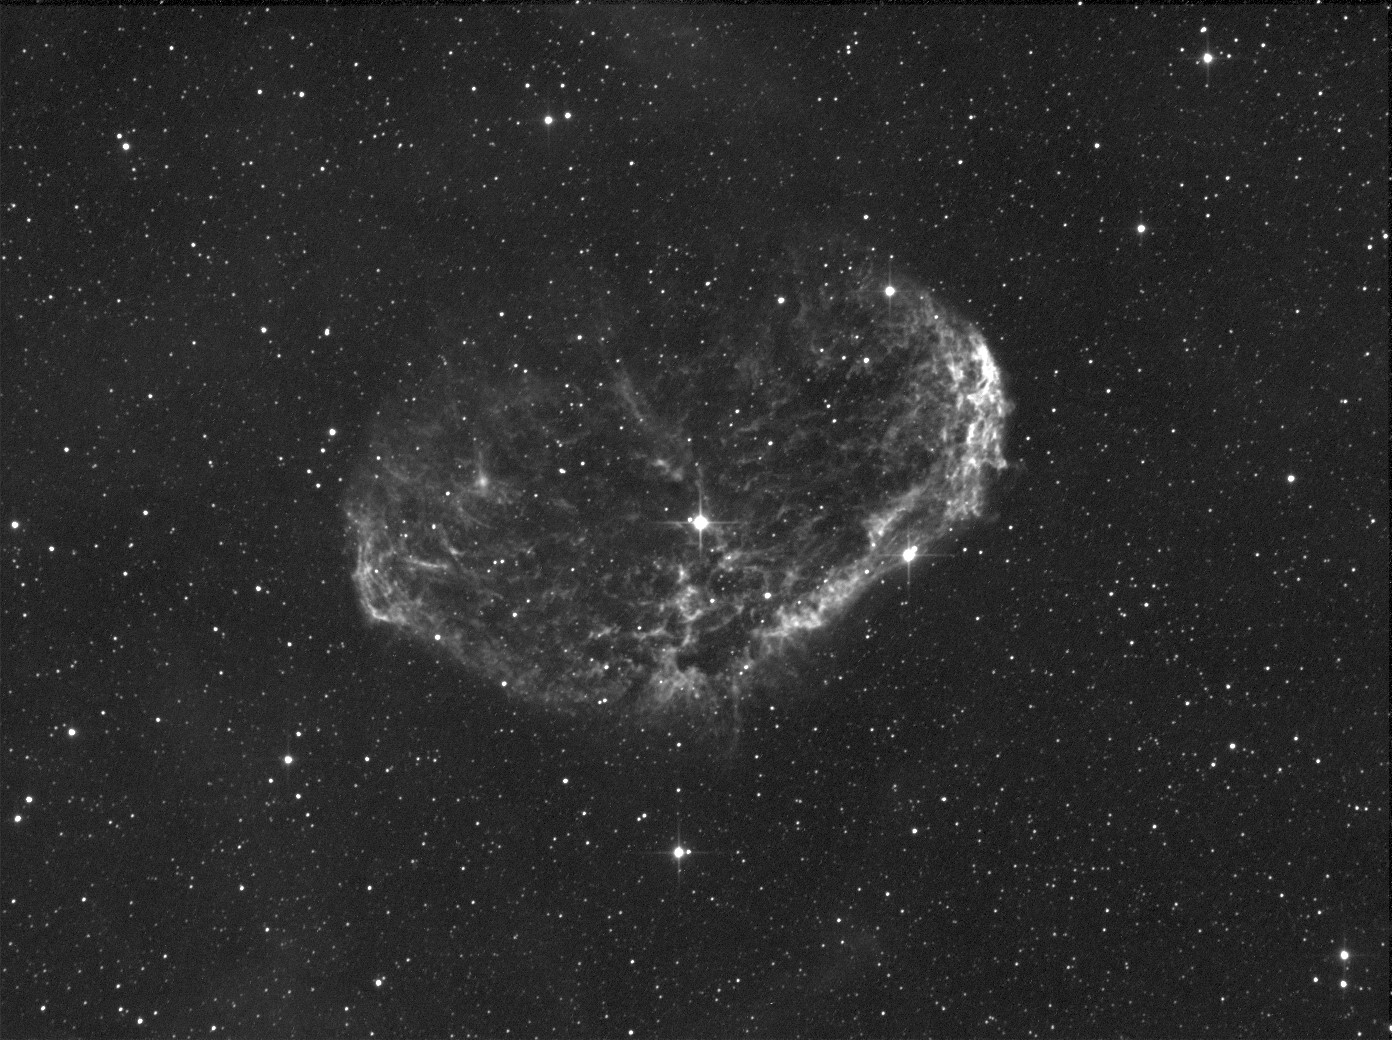 NGC_6888_Crescent nebula_5x300s_Ha.jpg